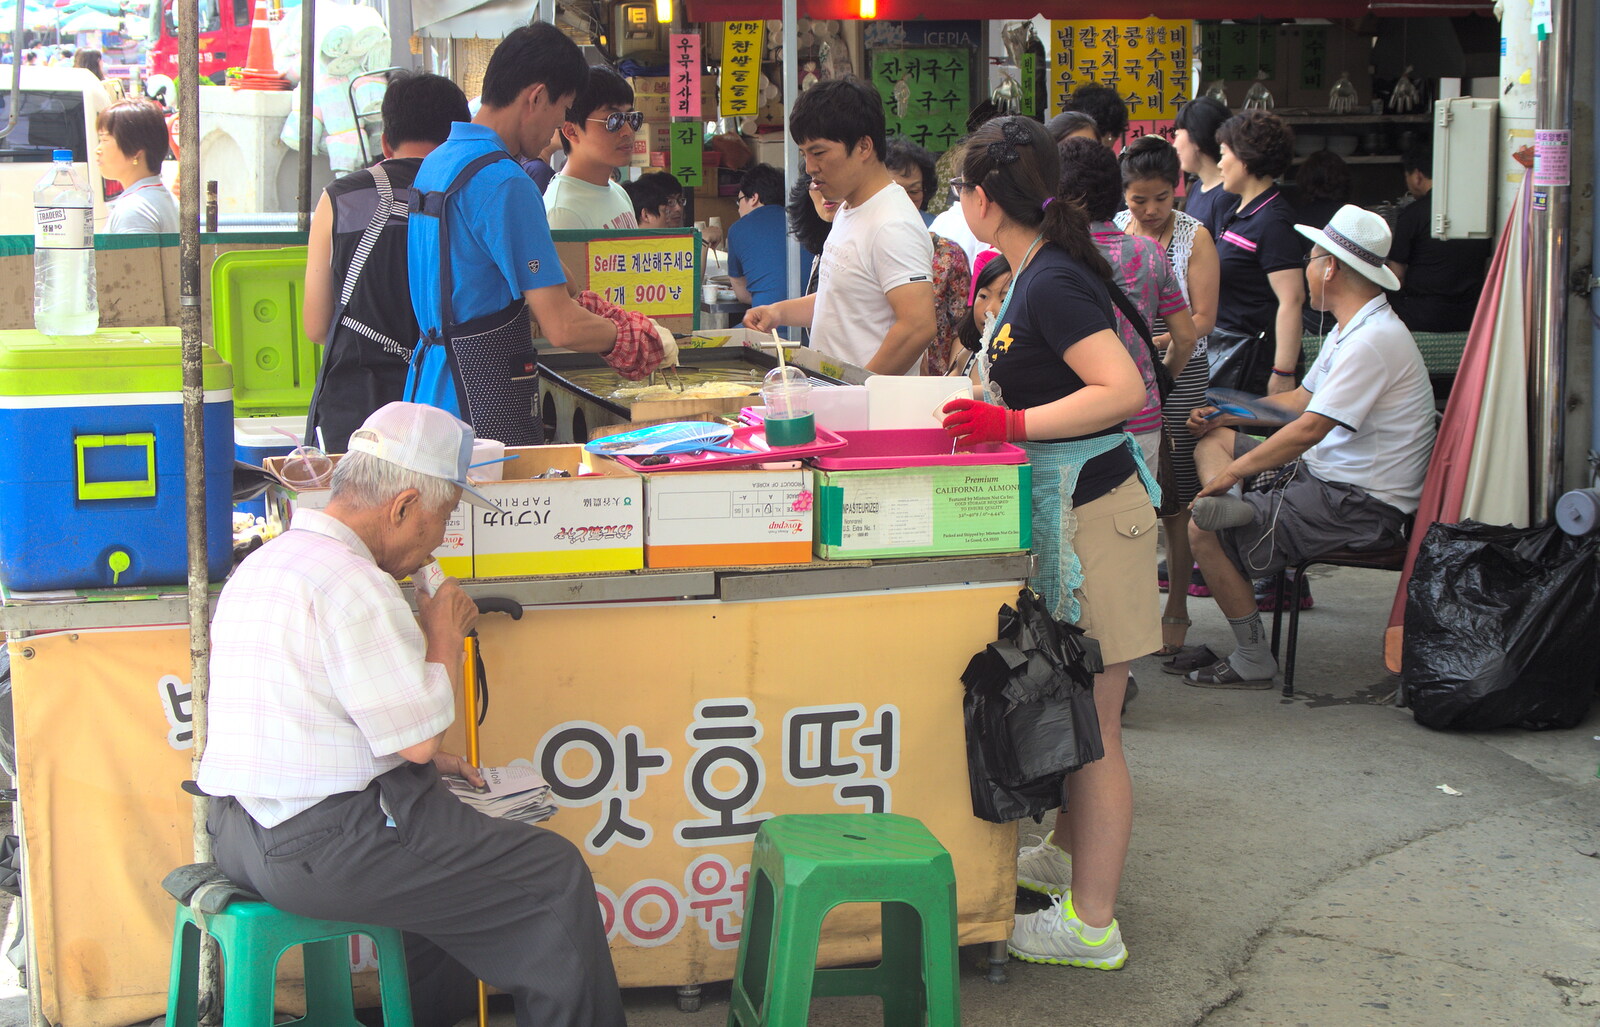 An old guy waits from Seomun Market, Daegu, South Korea - 1st July 2012